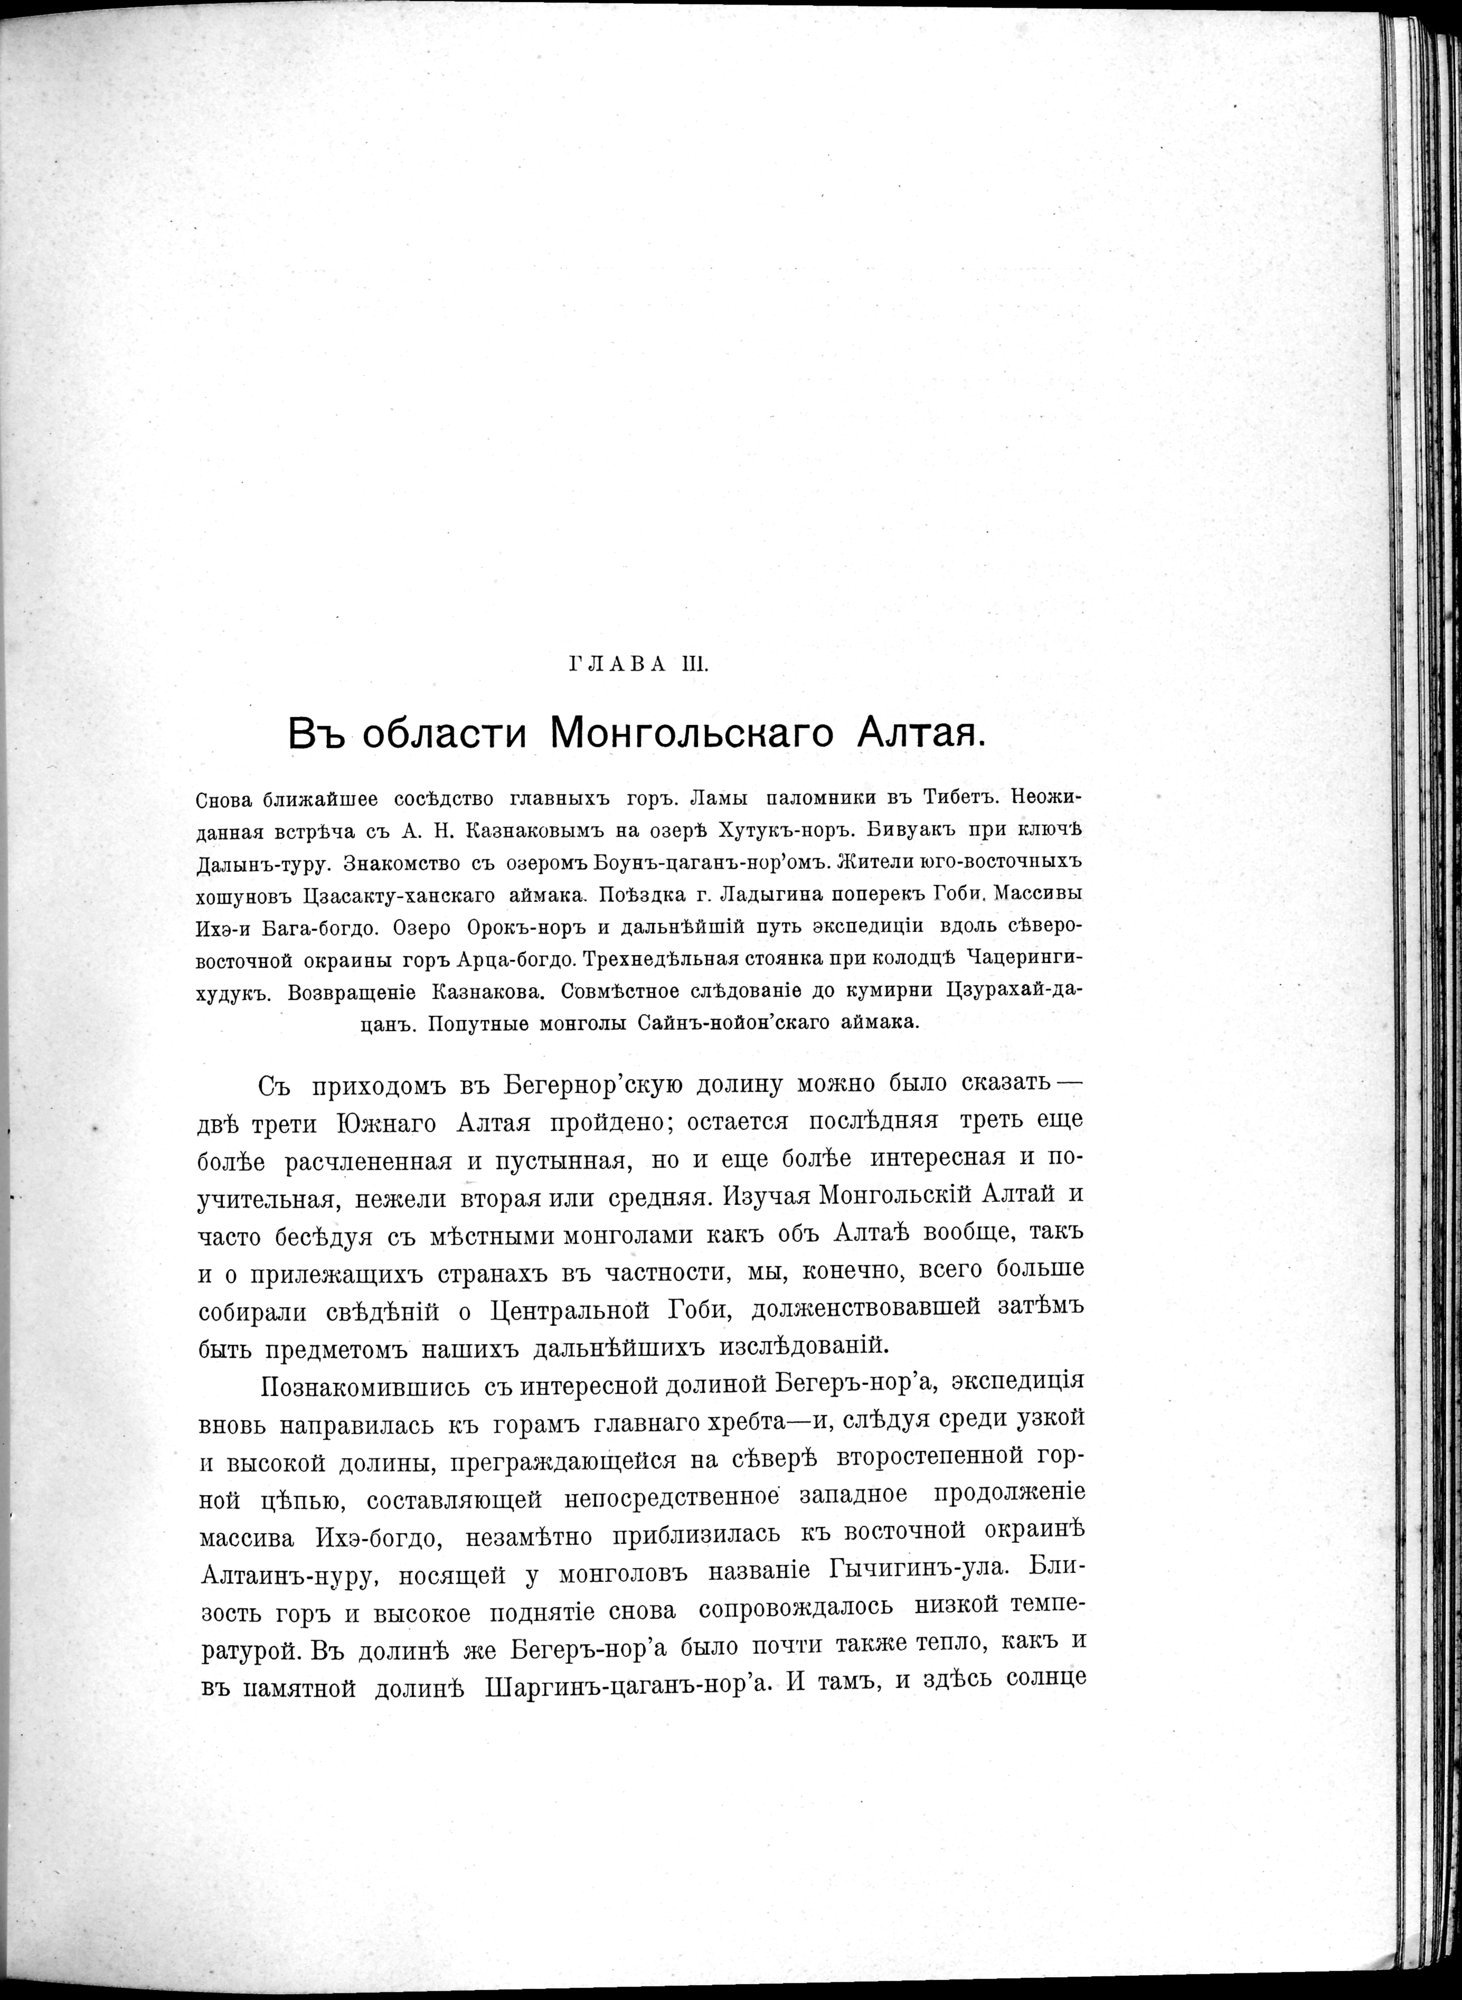 Mongoliia i Kam : vol.1 / Page 107 (Grayscale High Resolution Image)